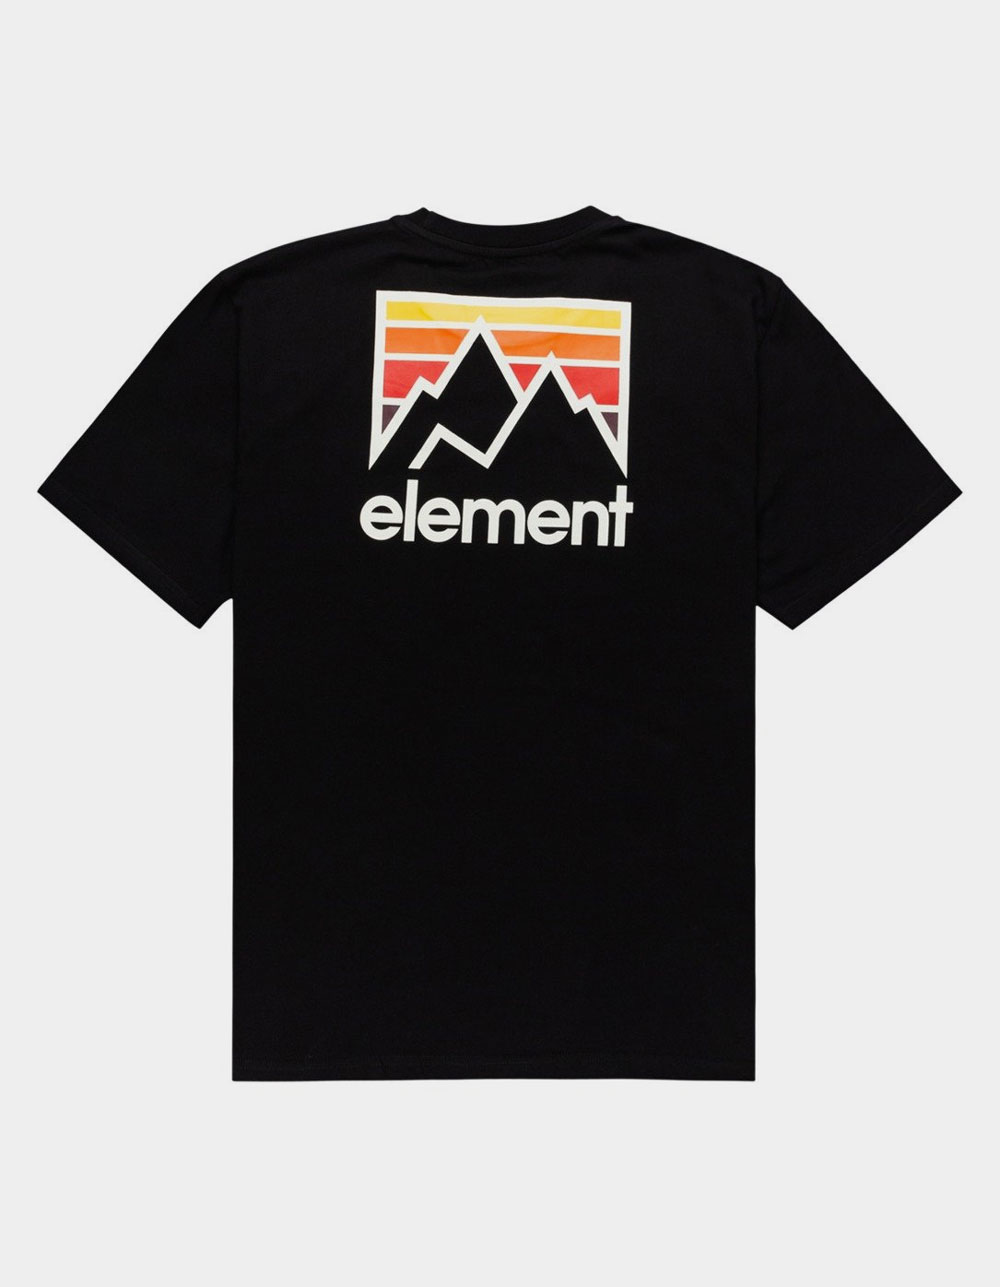 Element Skateboard Projects shirt size Medium M Clothing Brand Skating